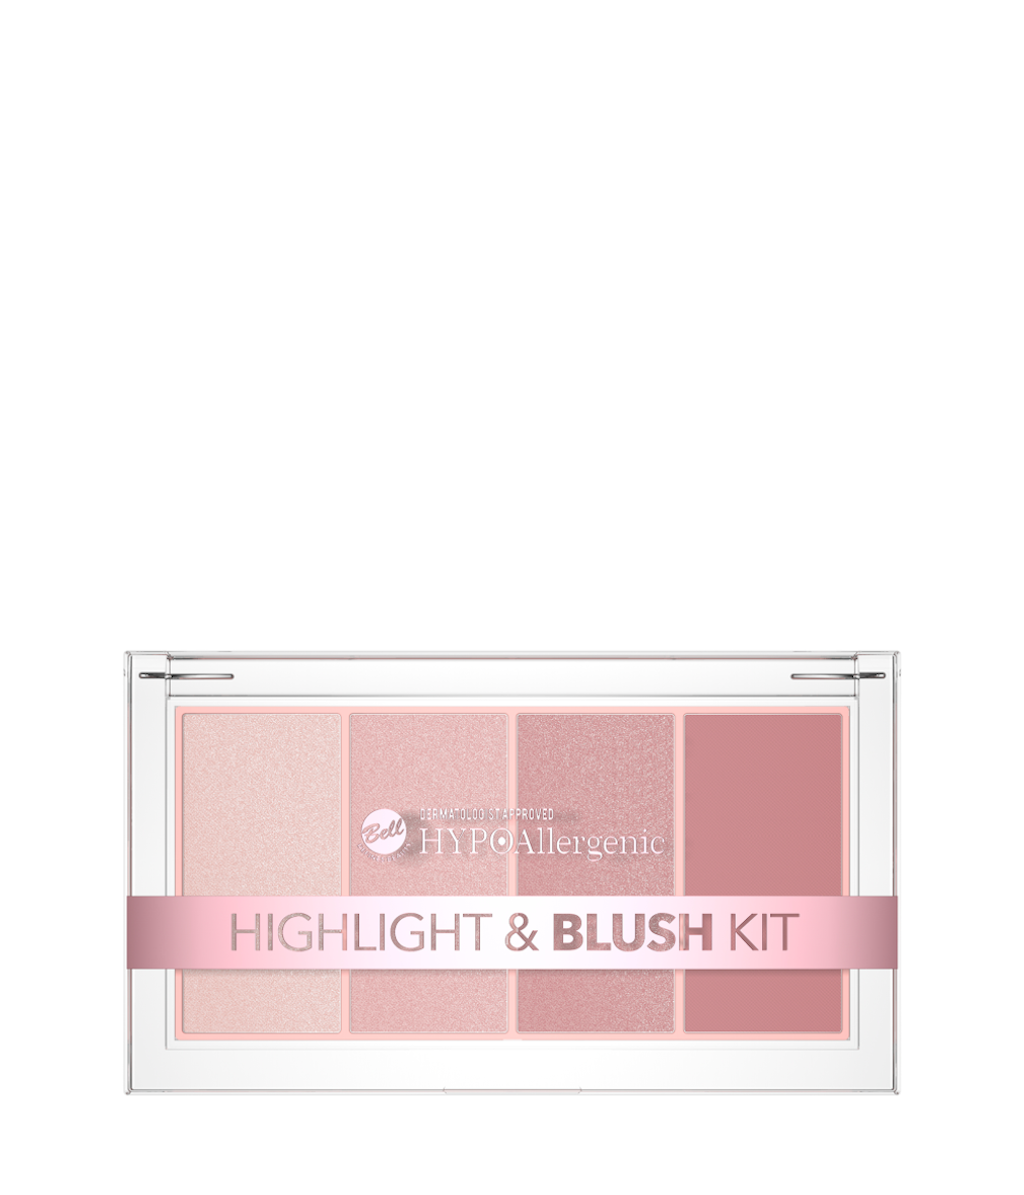 Highlight&Blush Kit